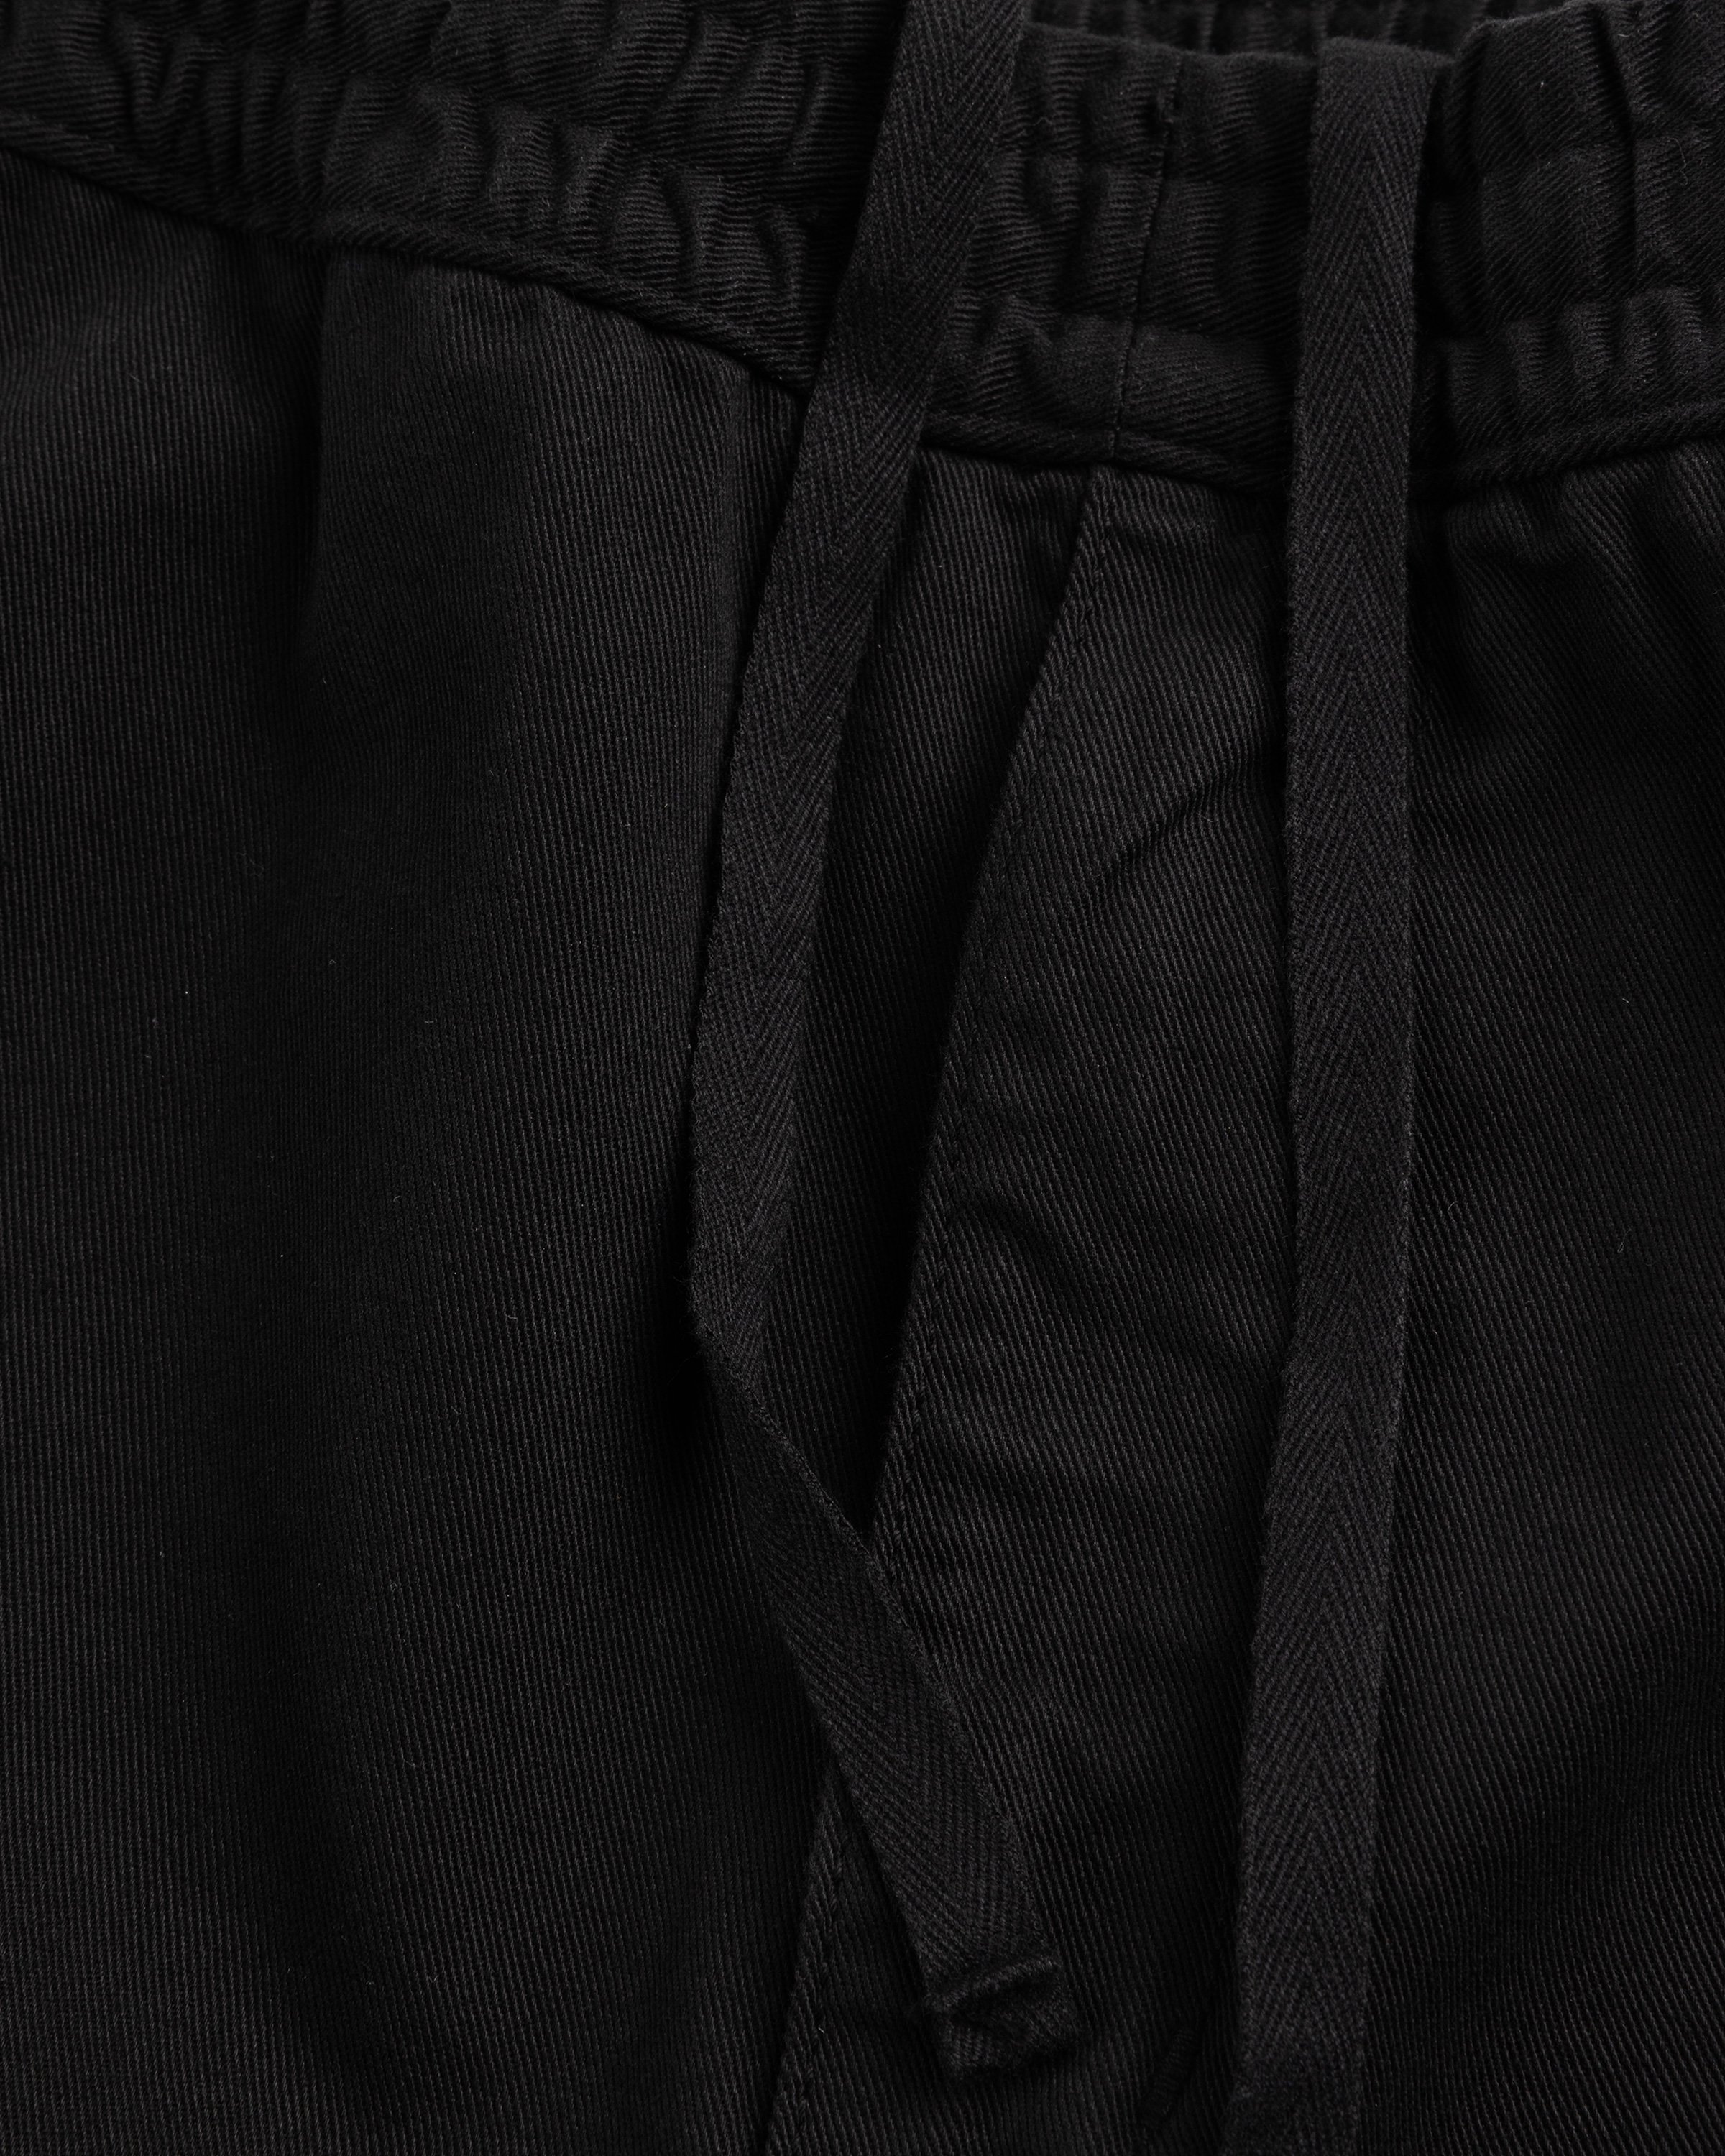 Carhartt WIP - Flint Short Black /garment dyed - Clothing - Black - Image 7